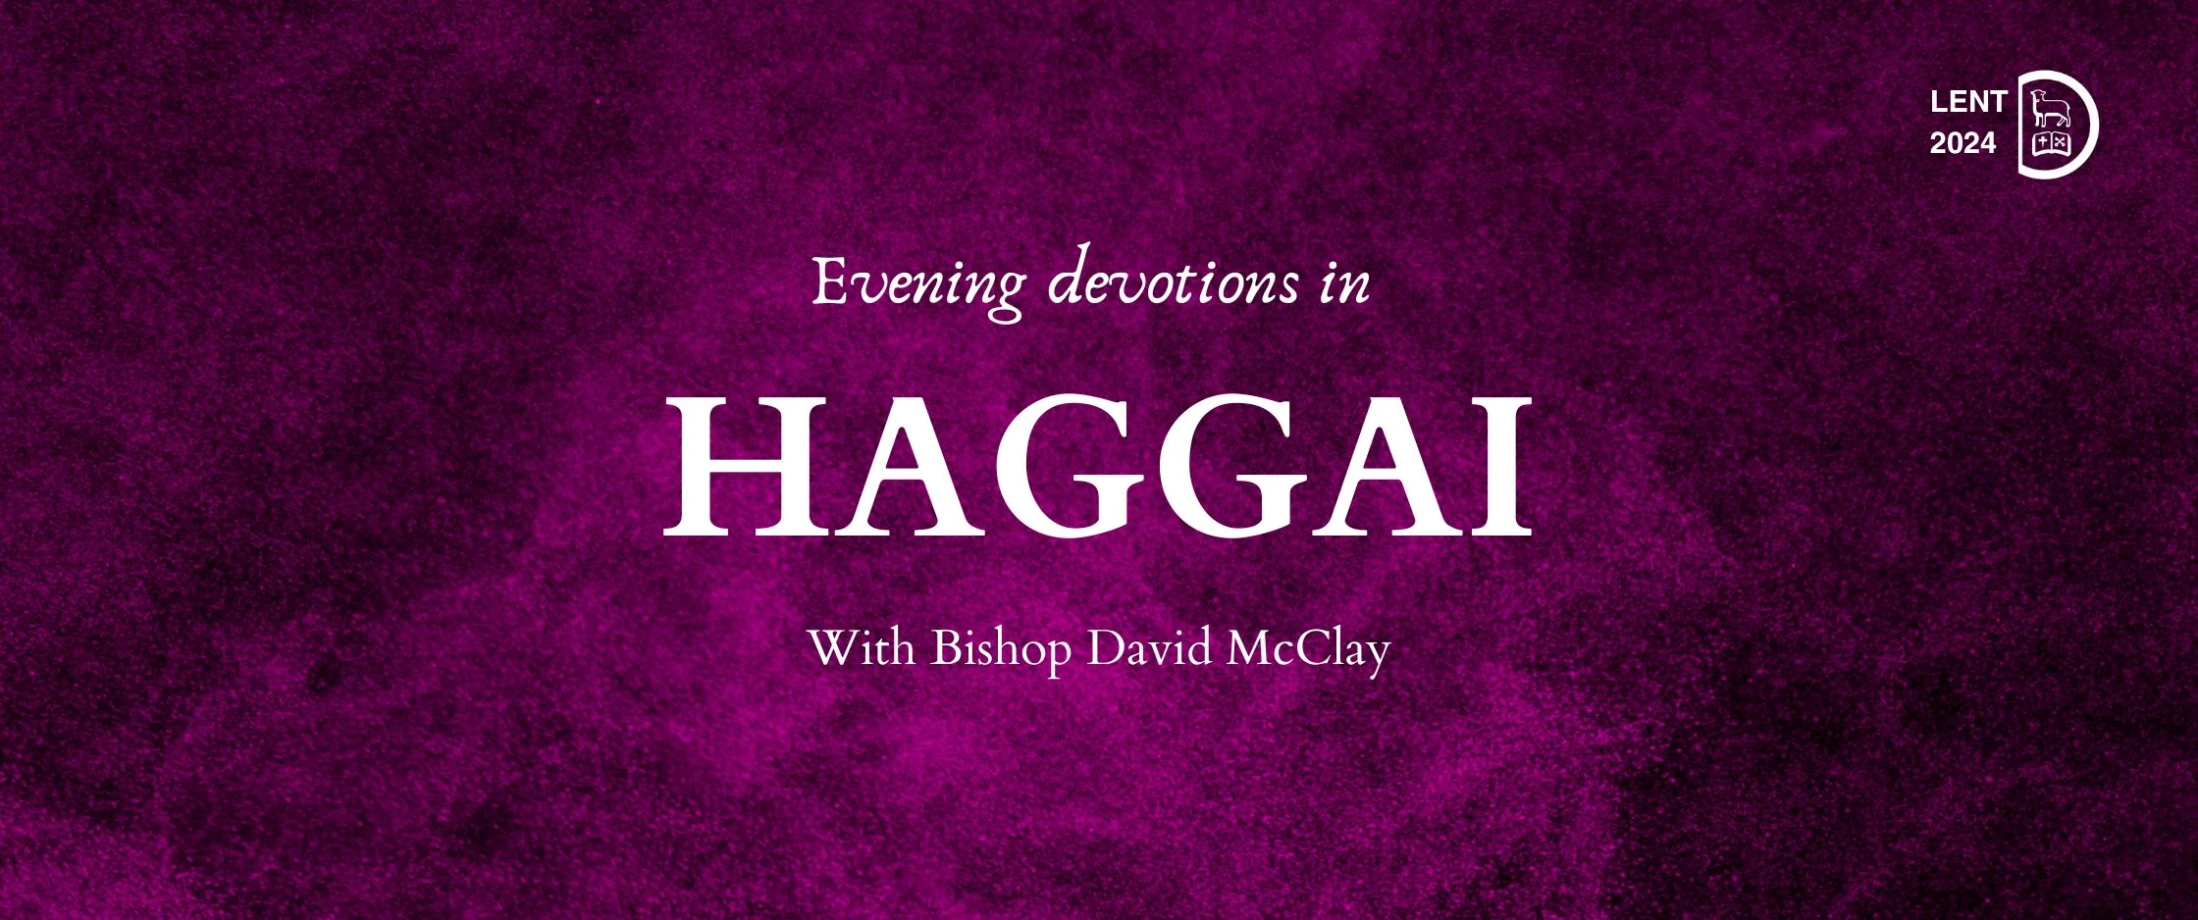 Day 40: Haggai 2:23